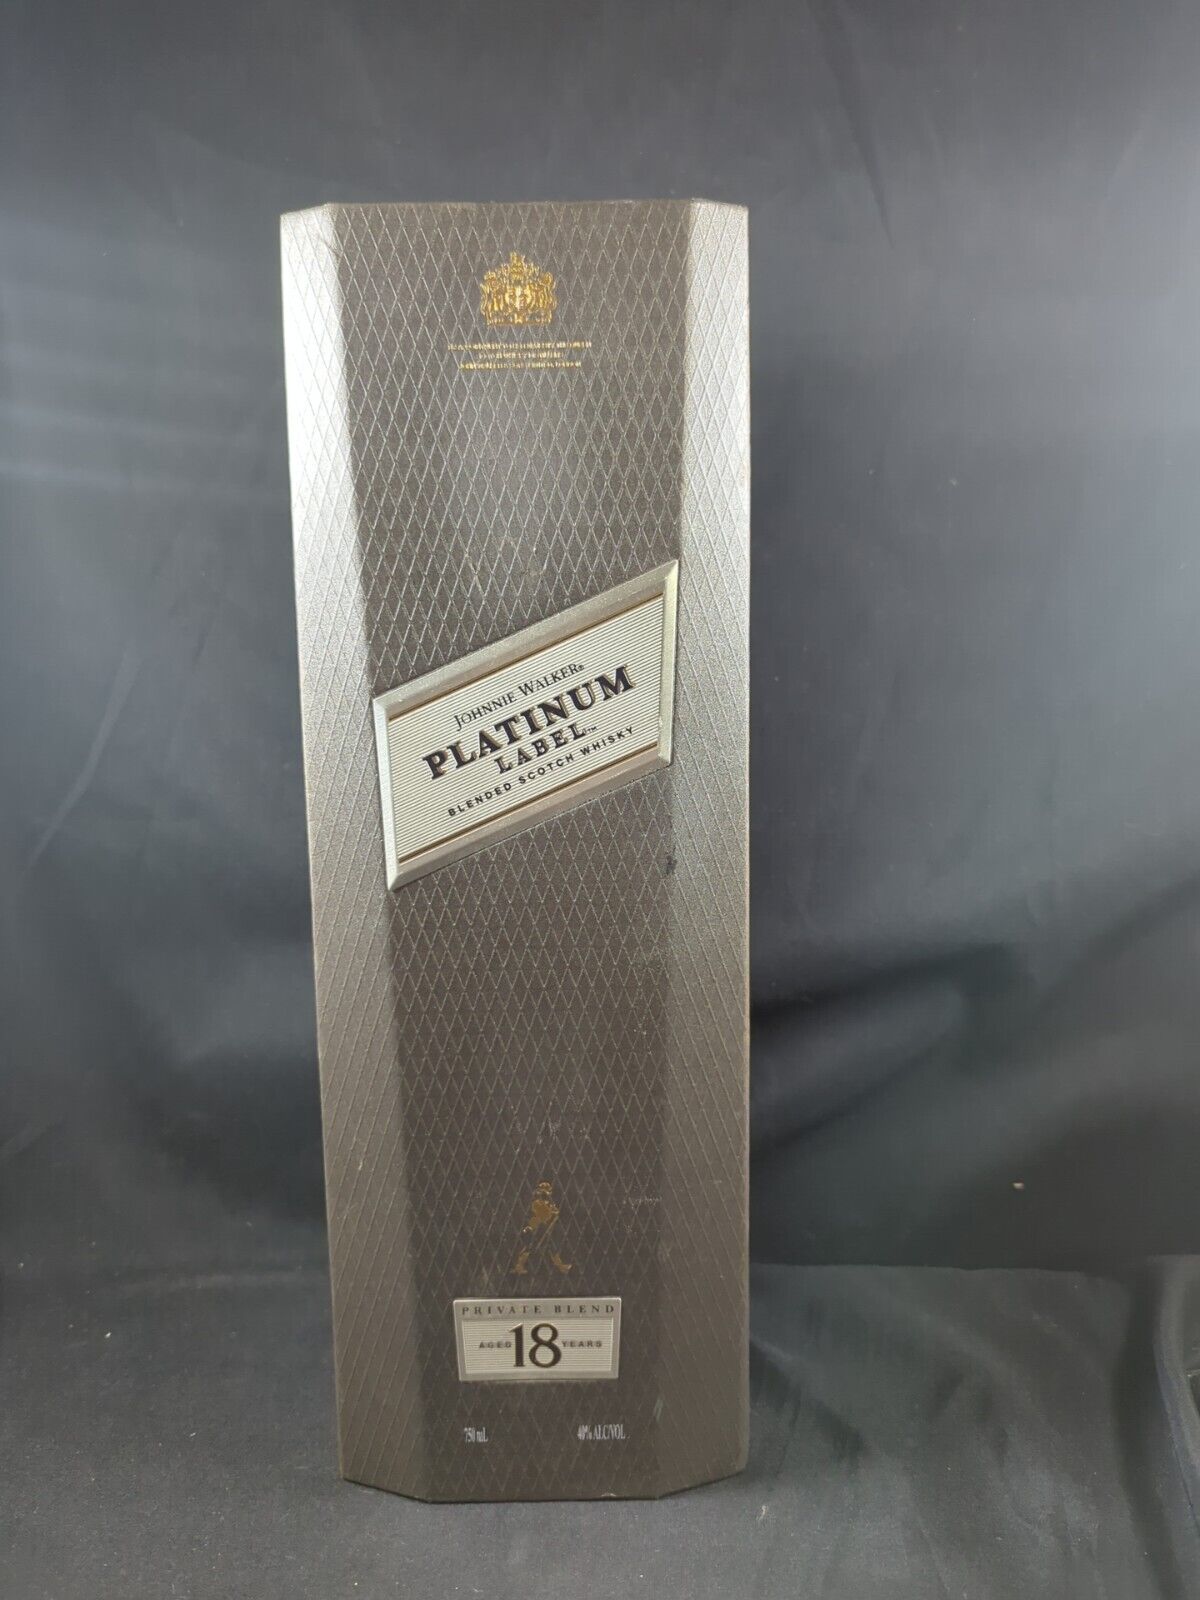 Johnnie Walker Platinum Label Blended Scotch Whisky 750ml Empty Box Only